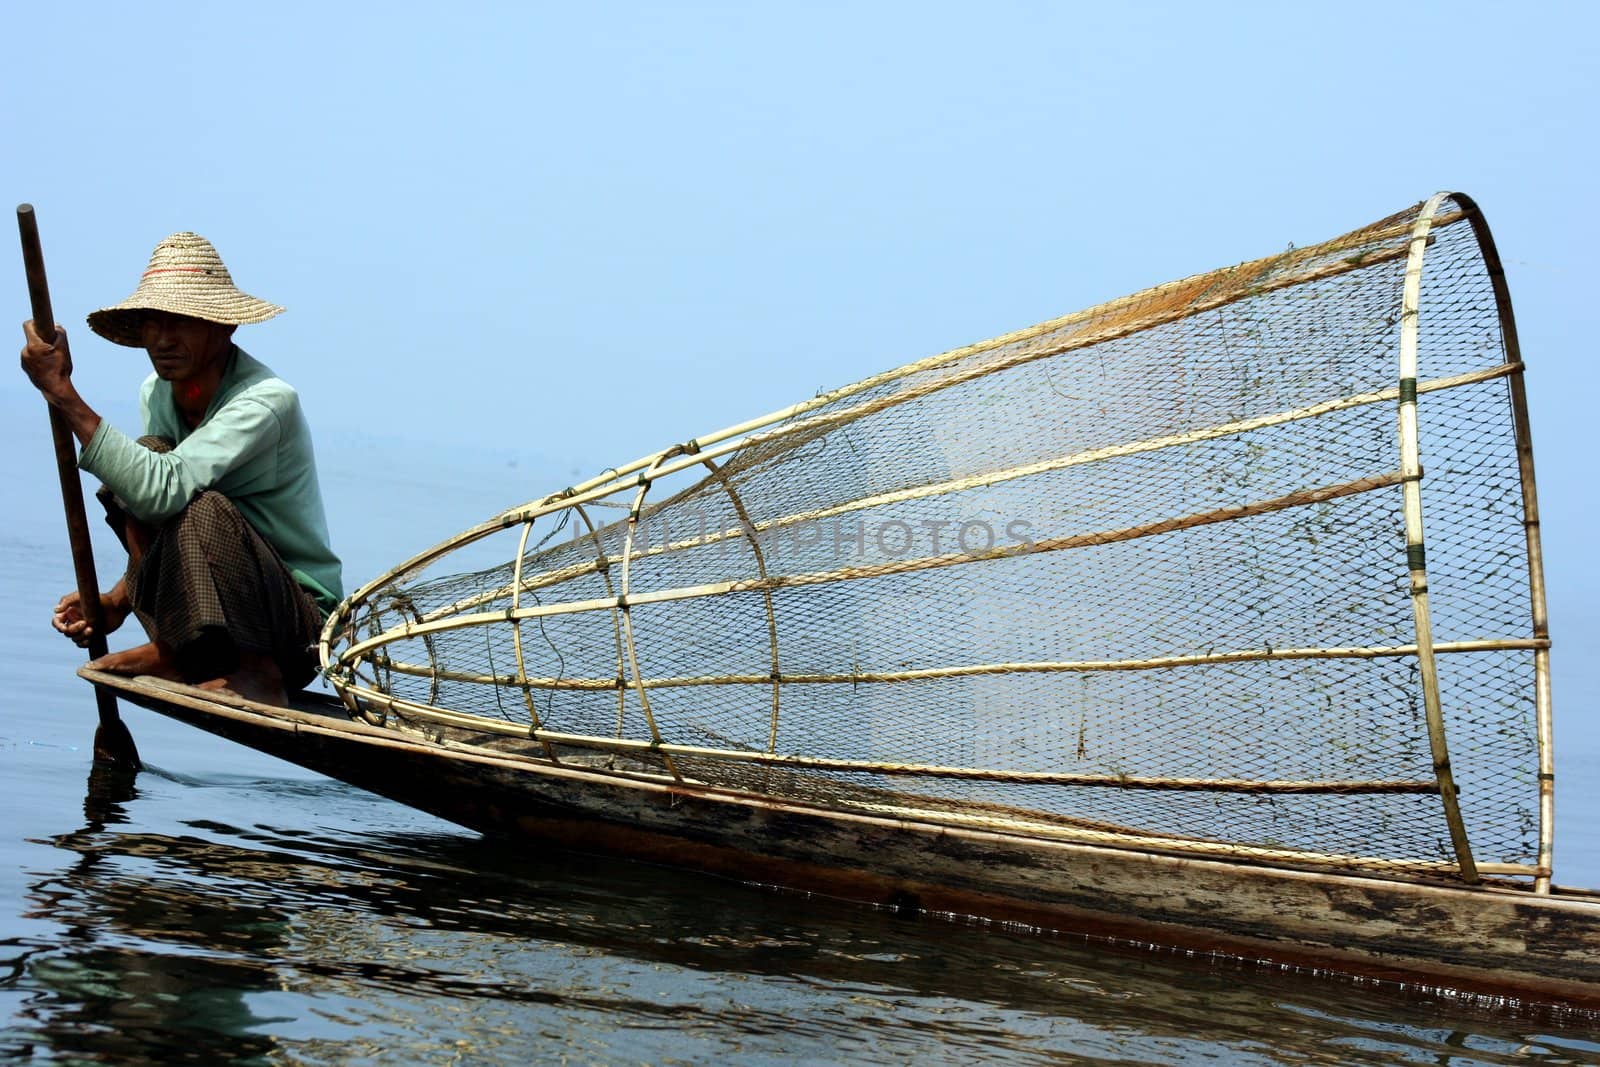 Myanmar fisher working in Inle Lake.